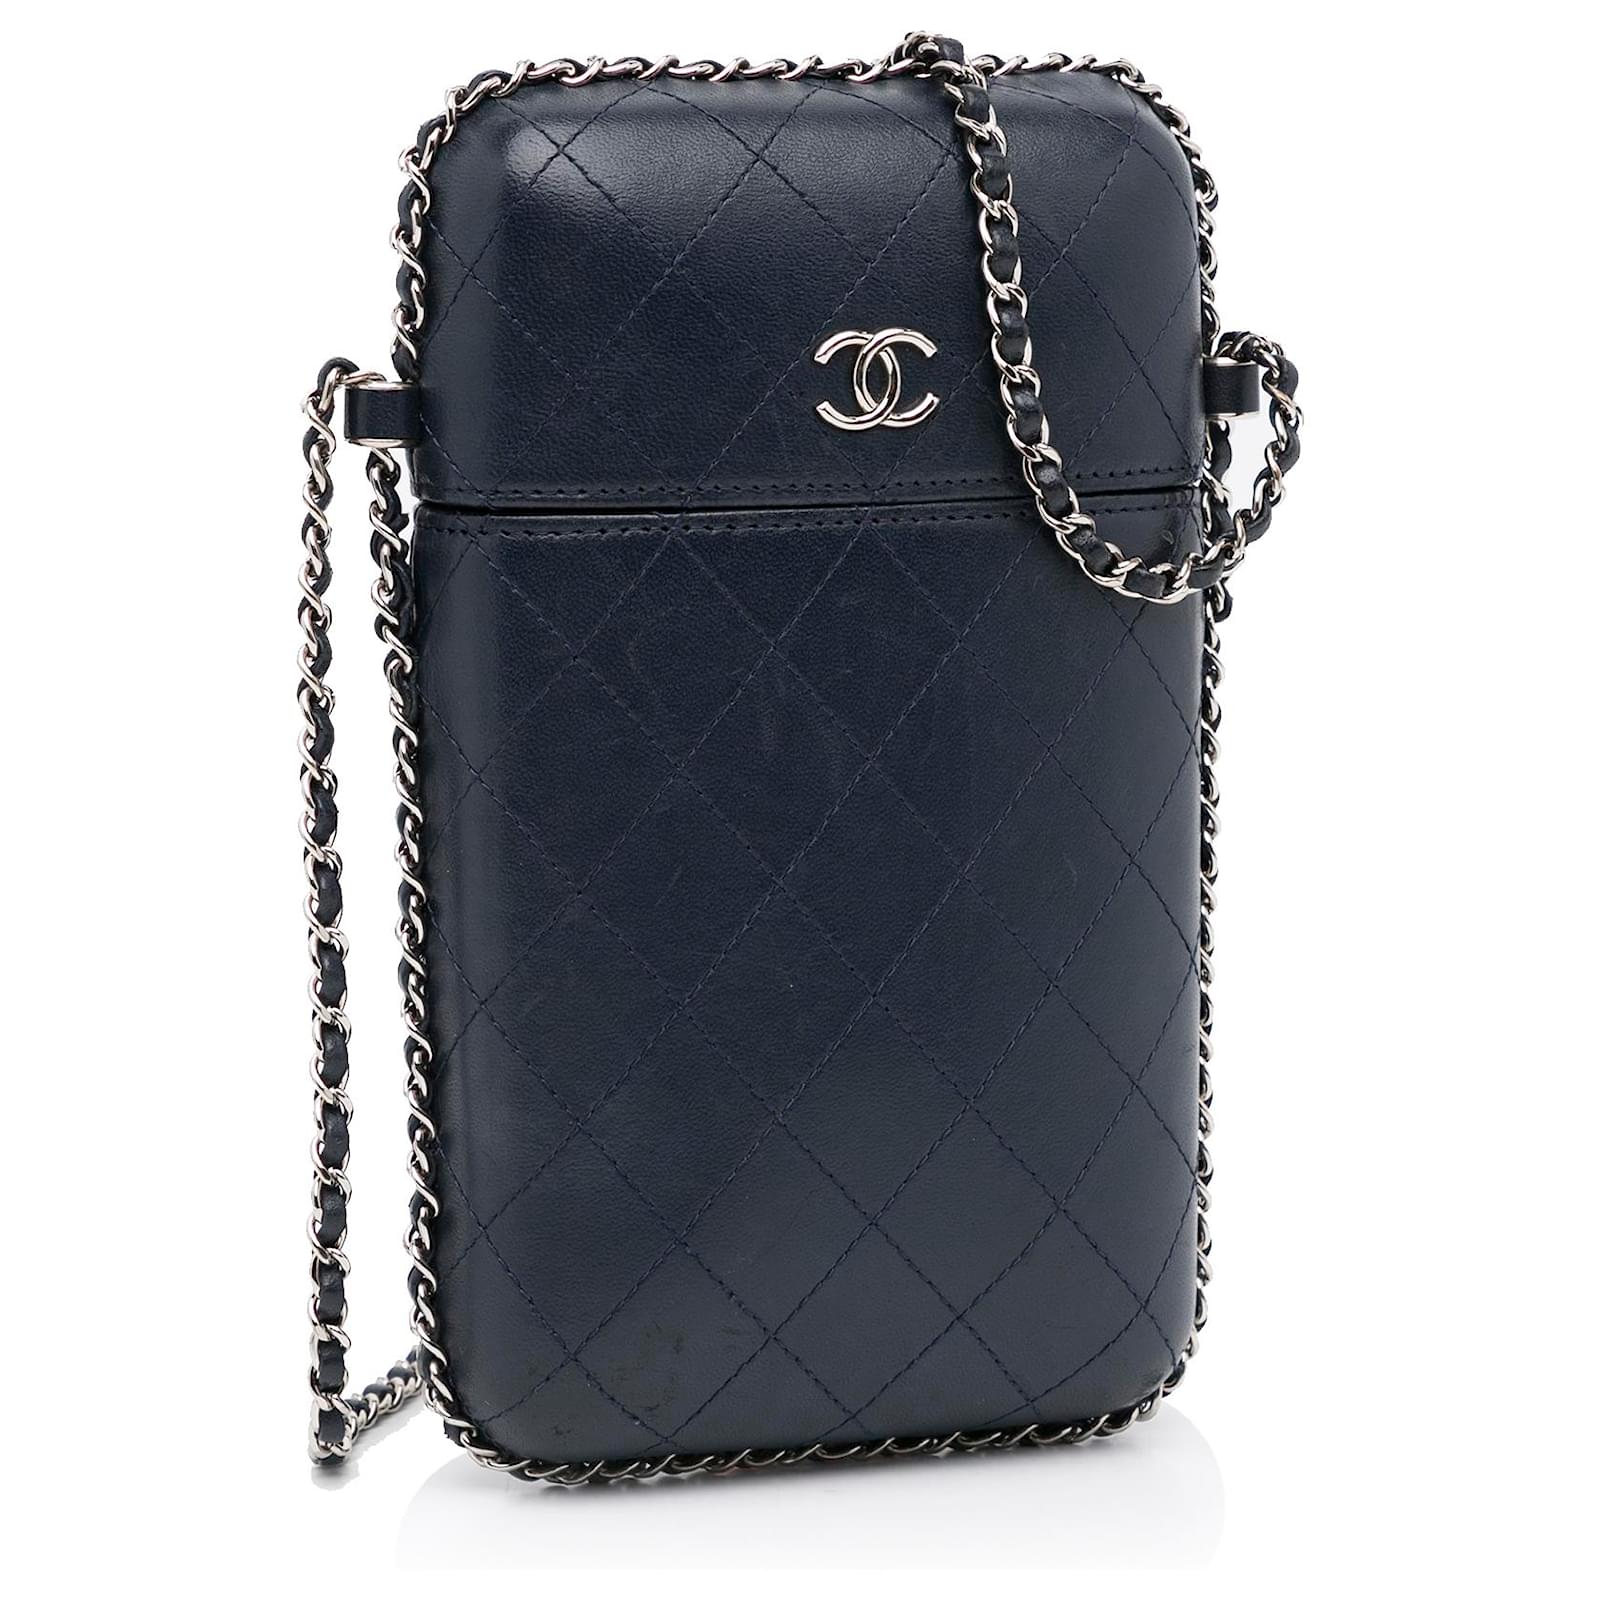 Chanel Black CC Phone Case Crossbody Bag Leather Pony-style